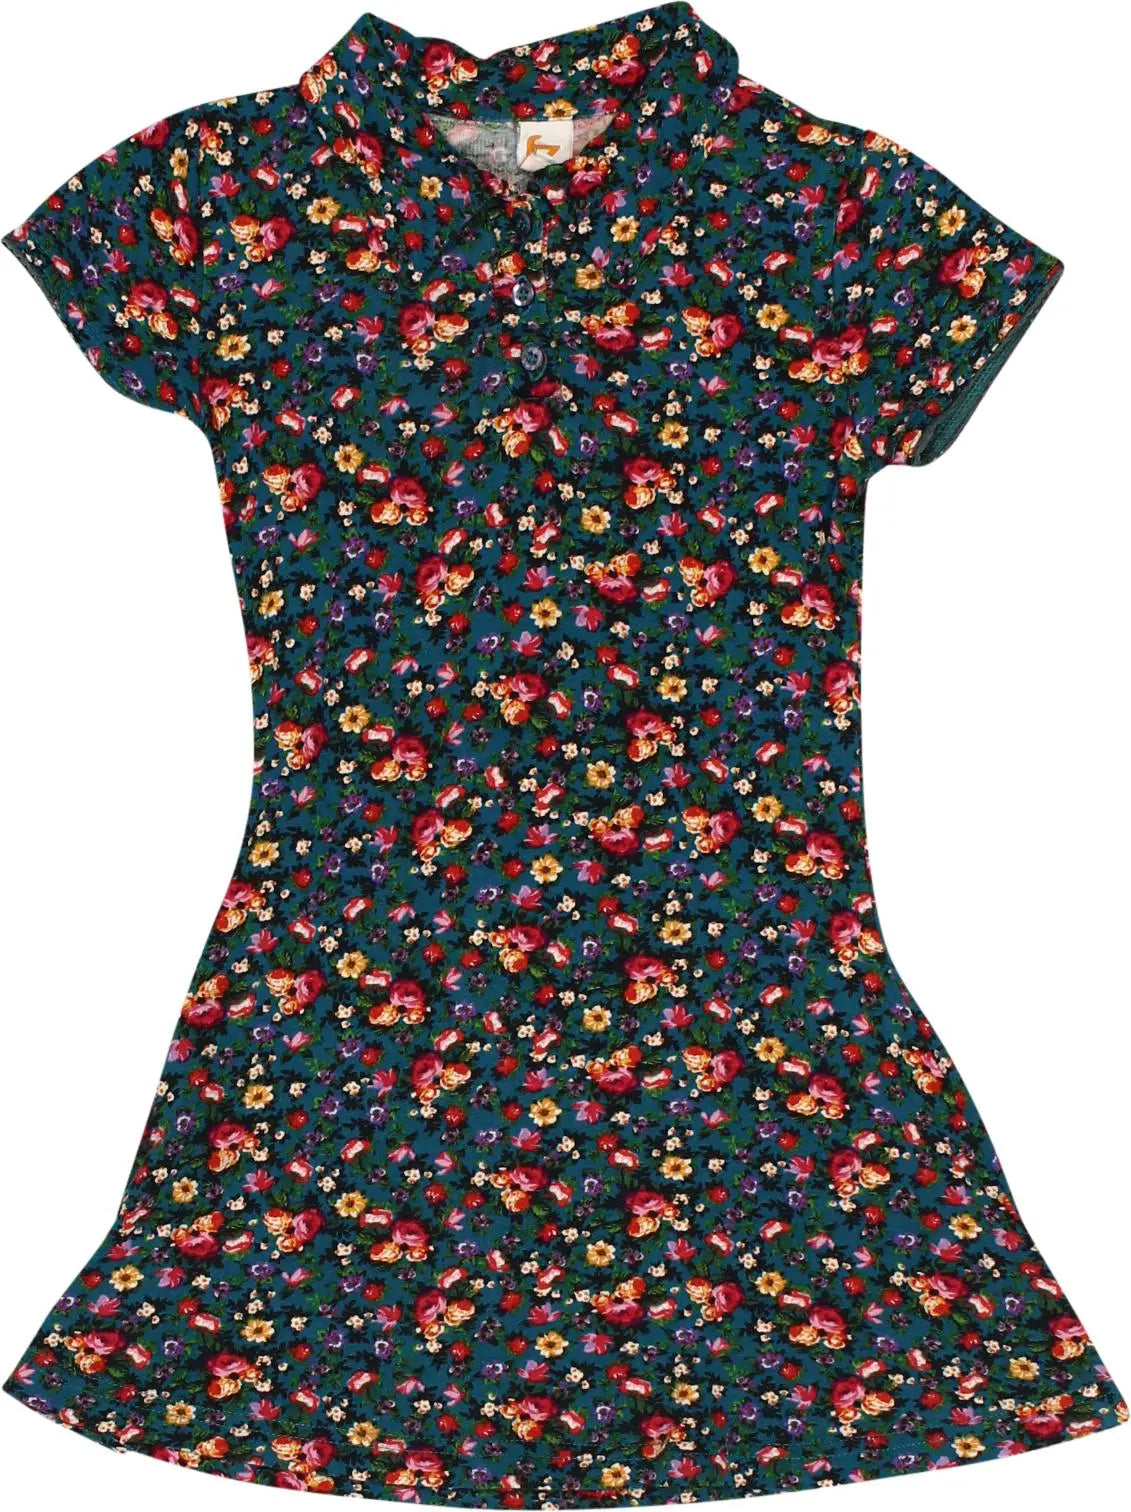 Frendz - Floral Dress- ThriftTale.com - Vintage and second handclothing